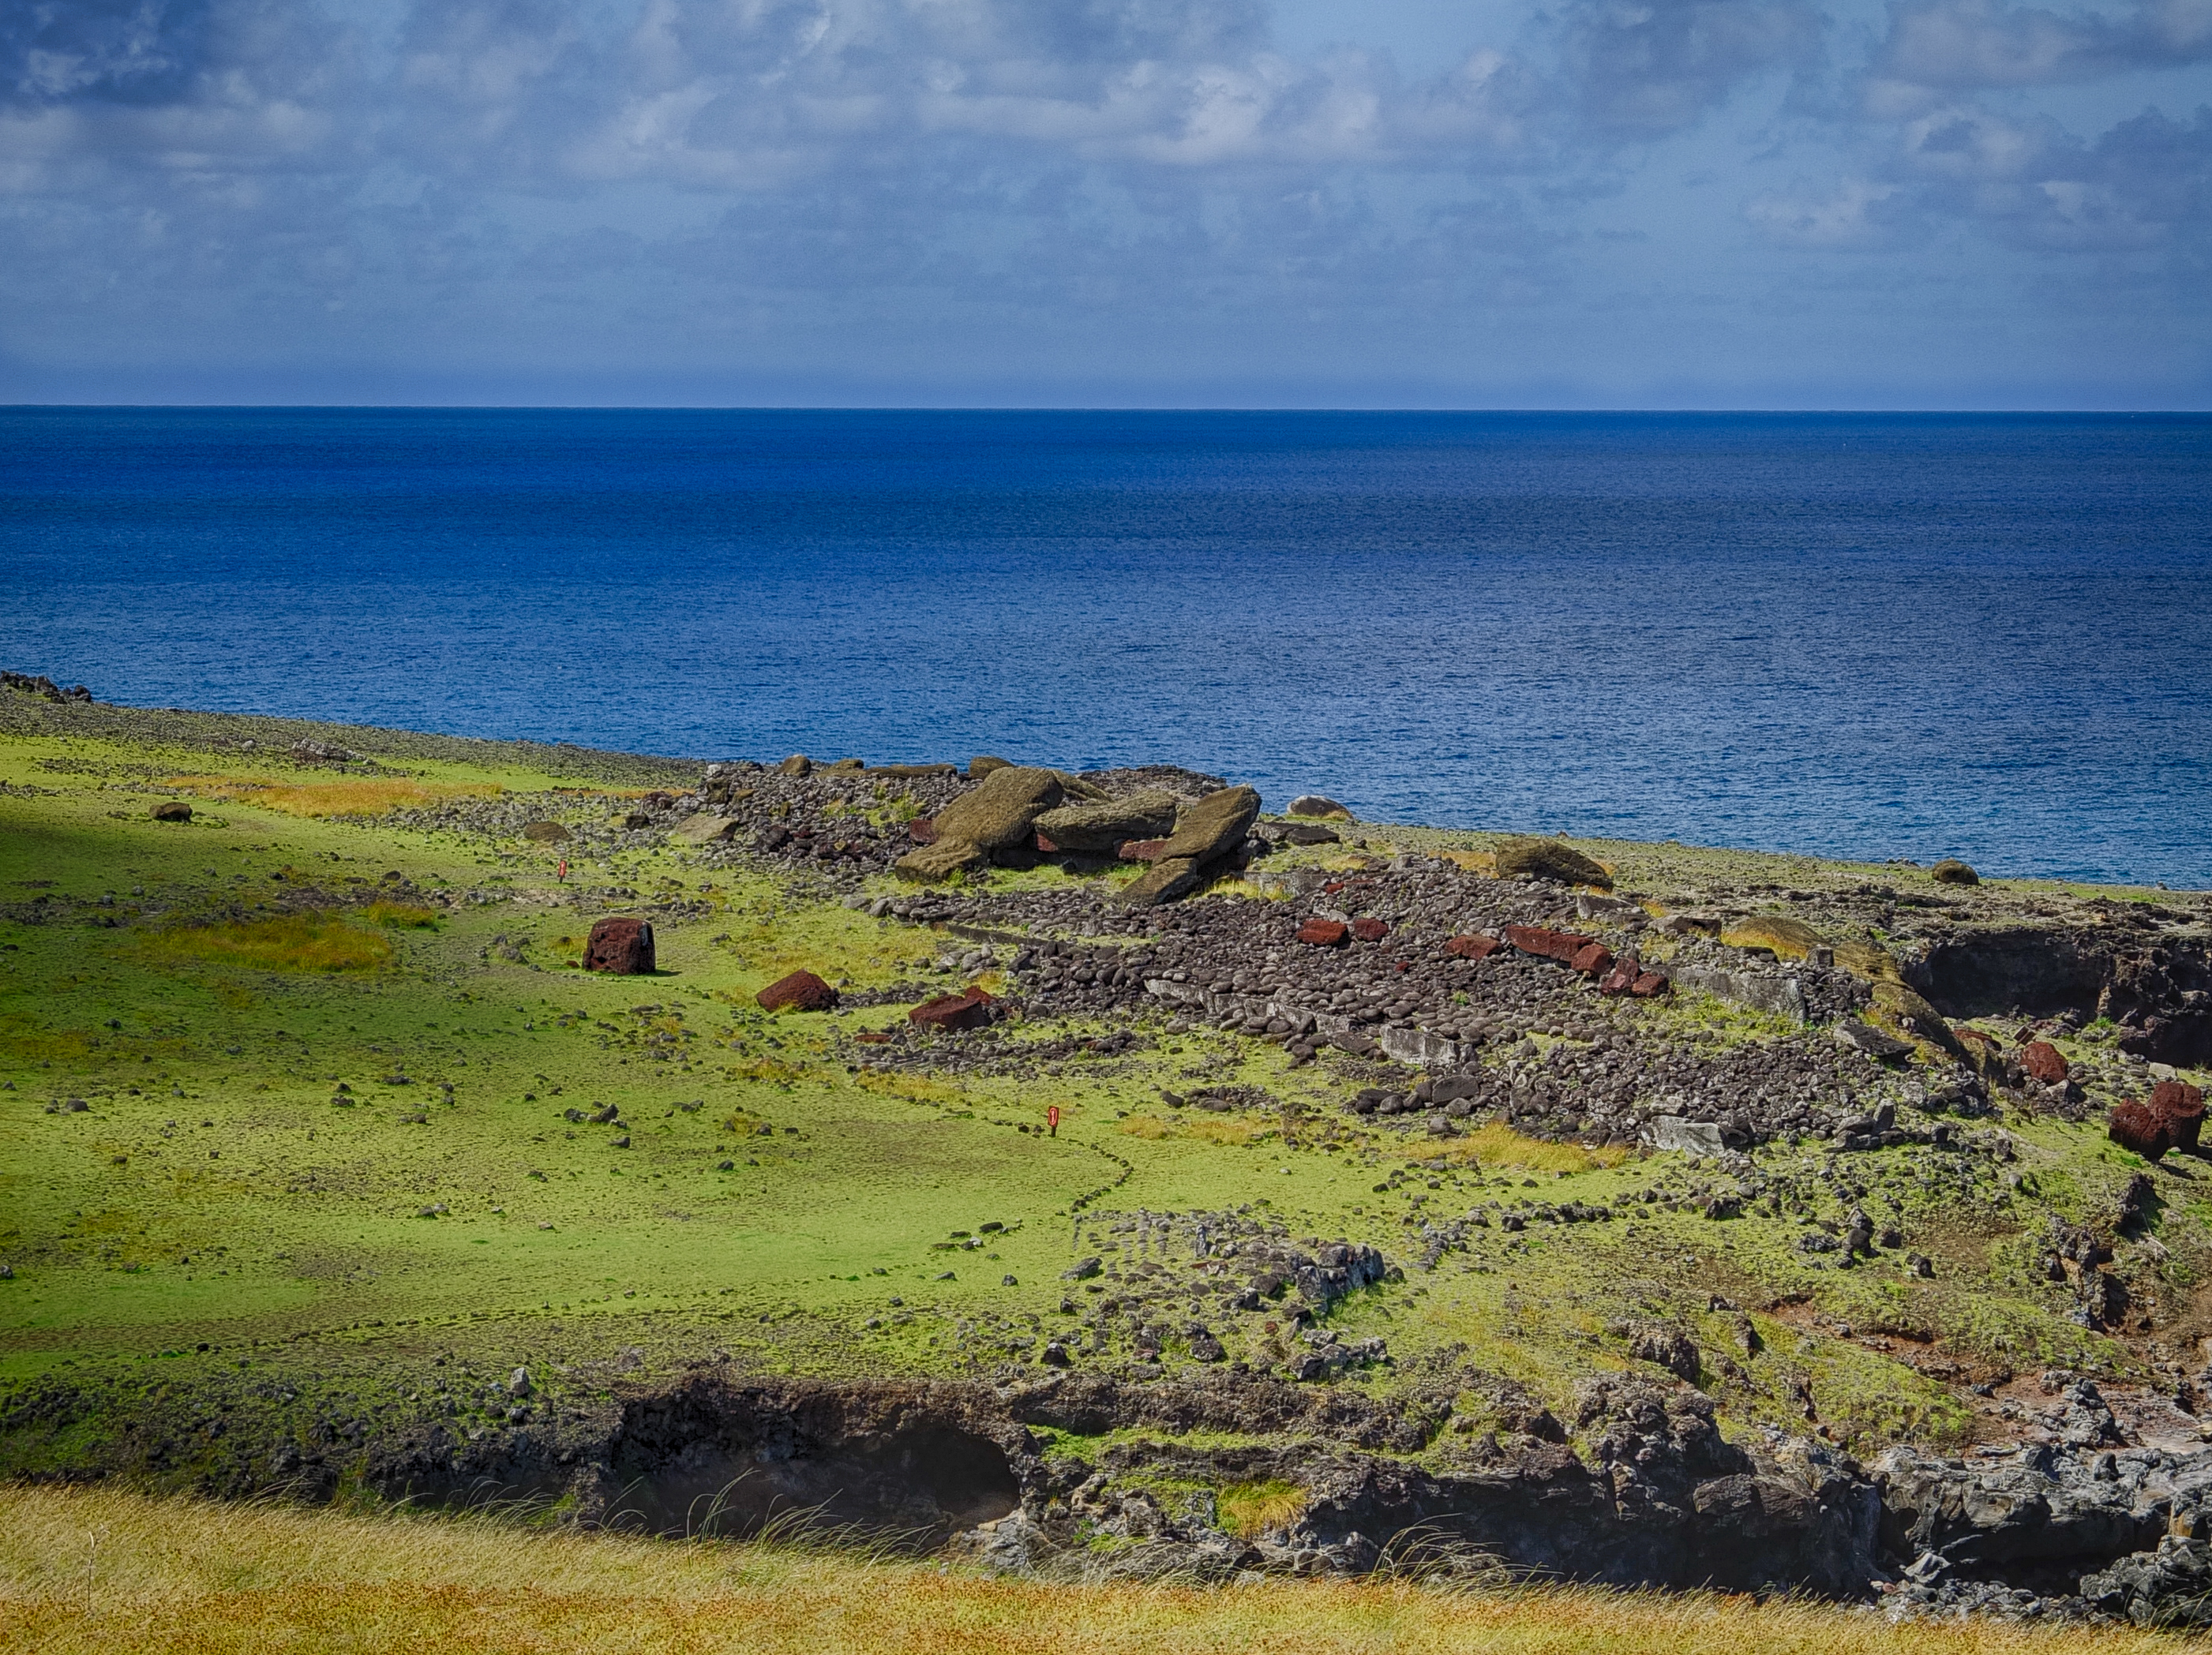 More Moai laid down